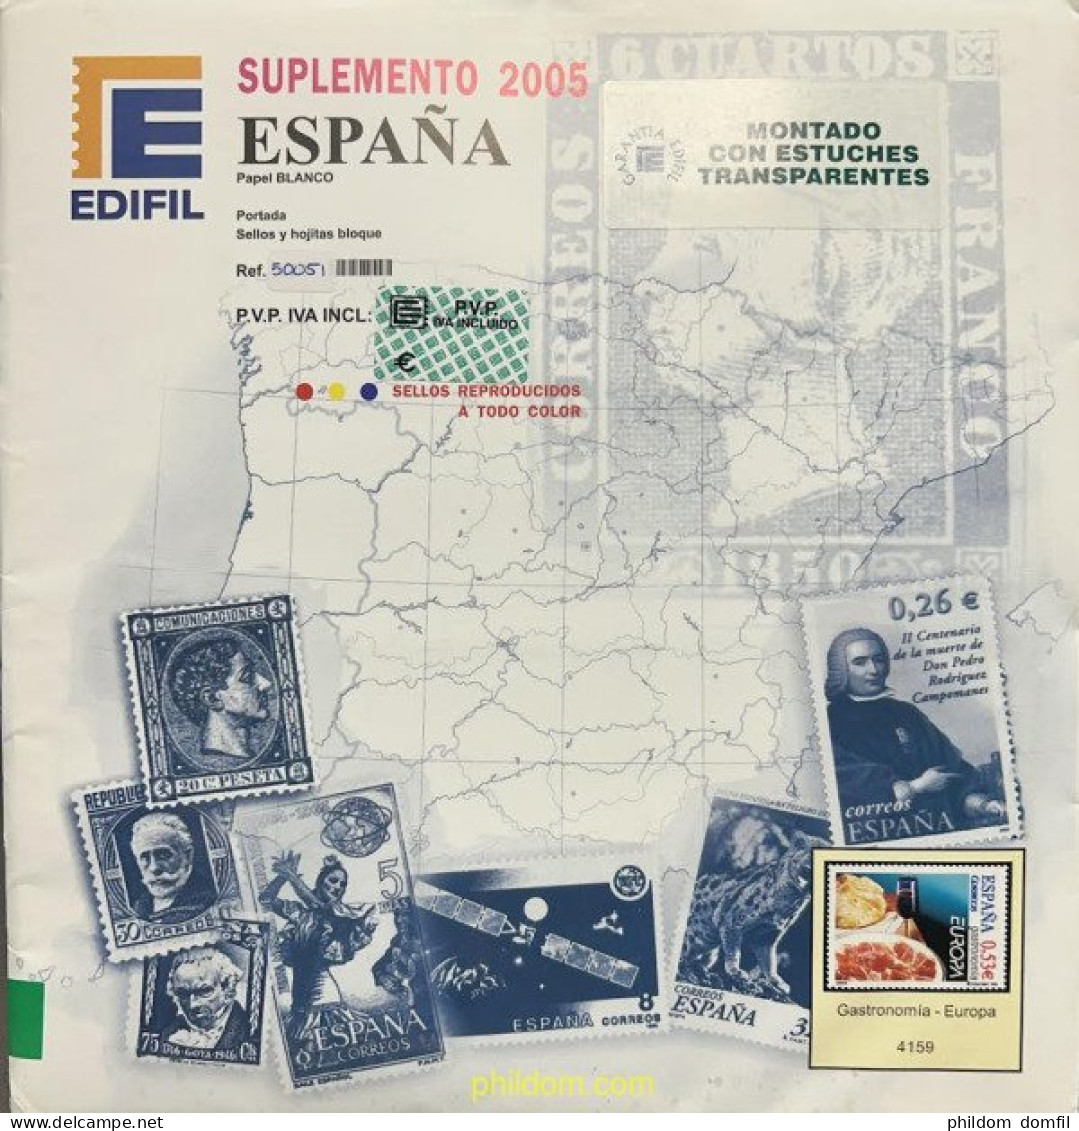 Hoja Suplemento ESPAÑA Edifil 2005 Montado Transparente - Pre-printed Pages